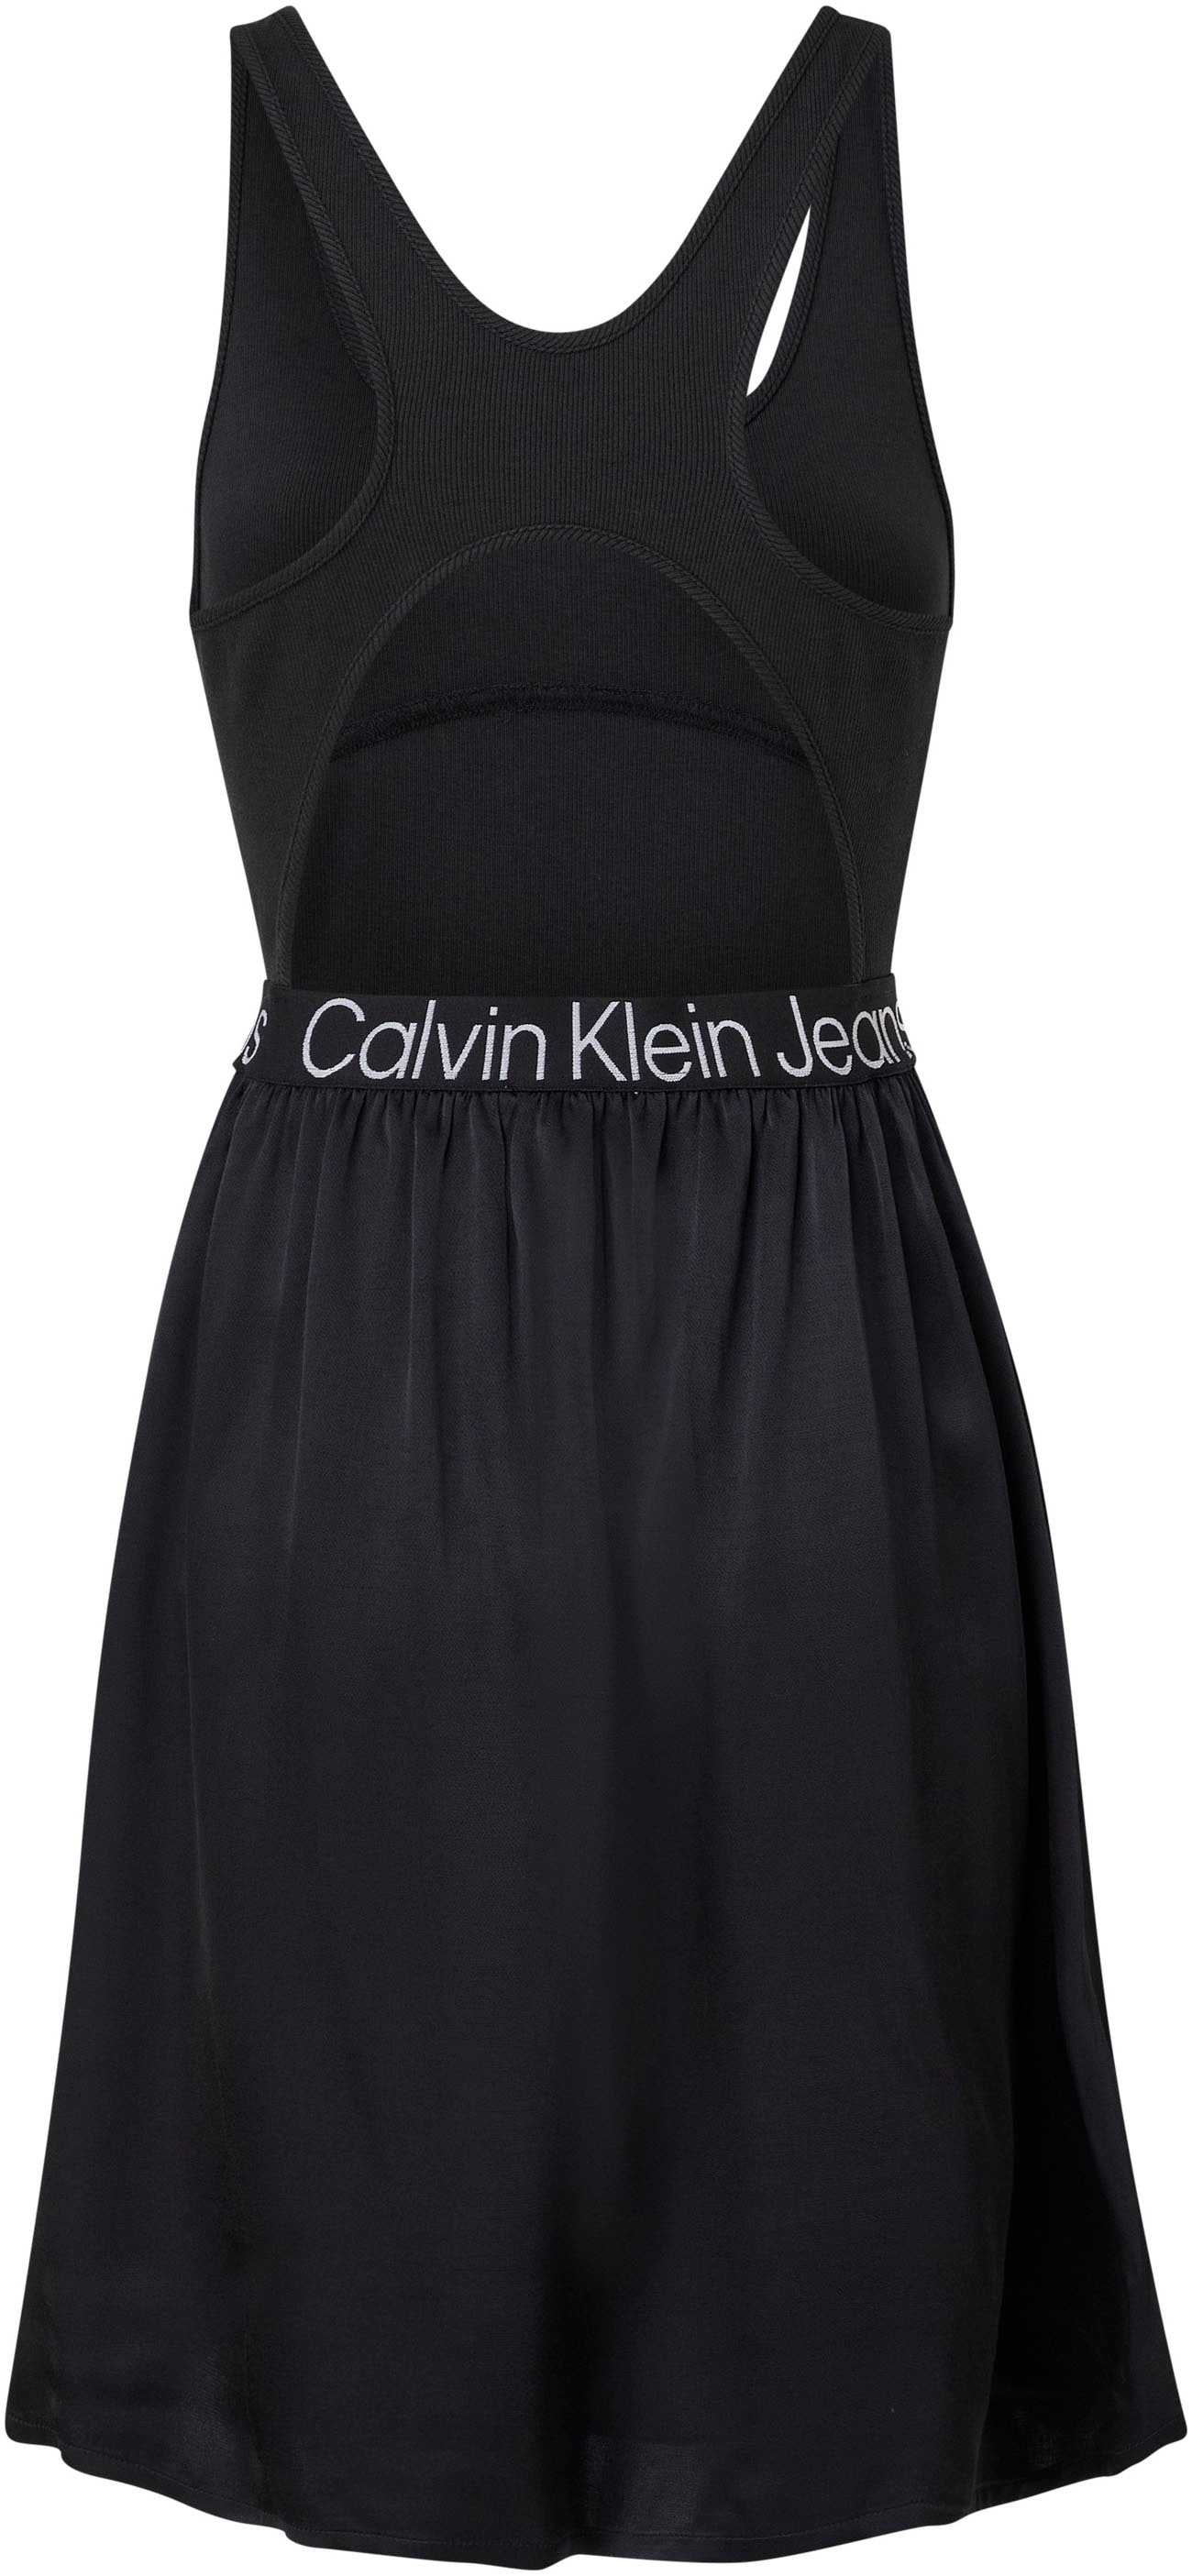 ♕ Calvin Klein Jeans Jerseykleid »RACERBACK LOGO ELASTIC DRESS«  versandkostenfrei bestellen